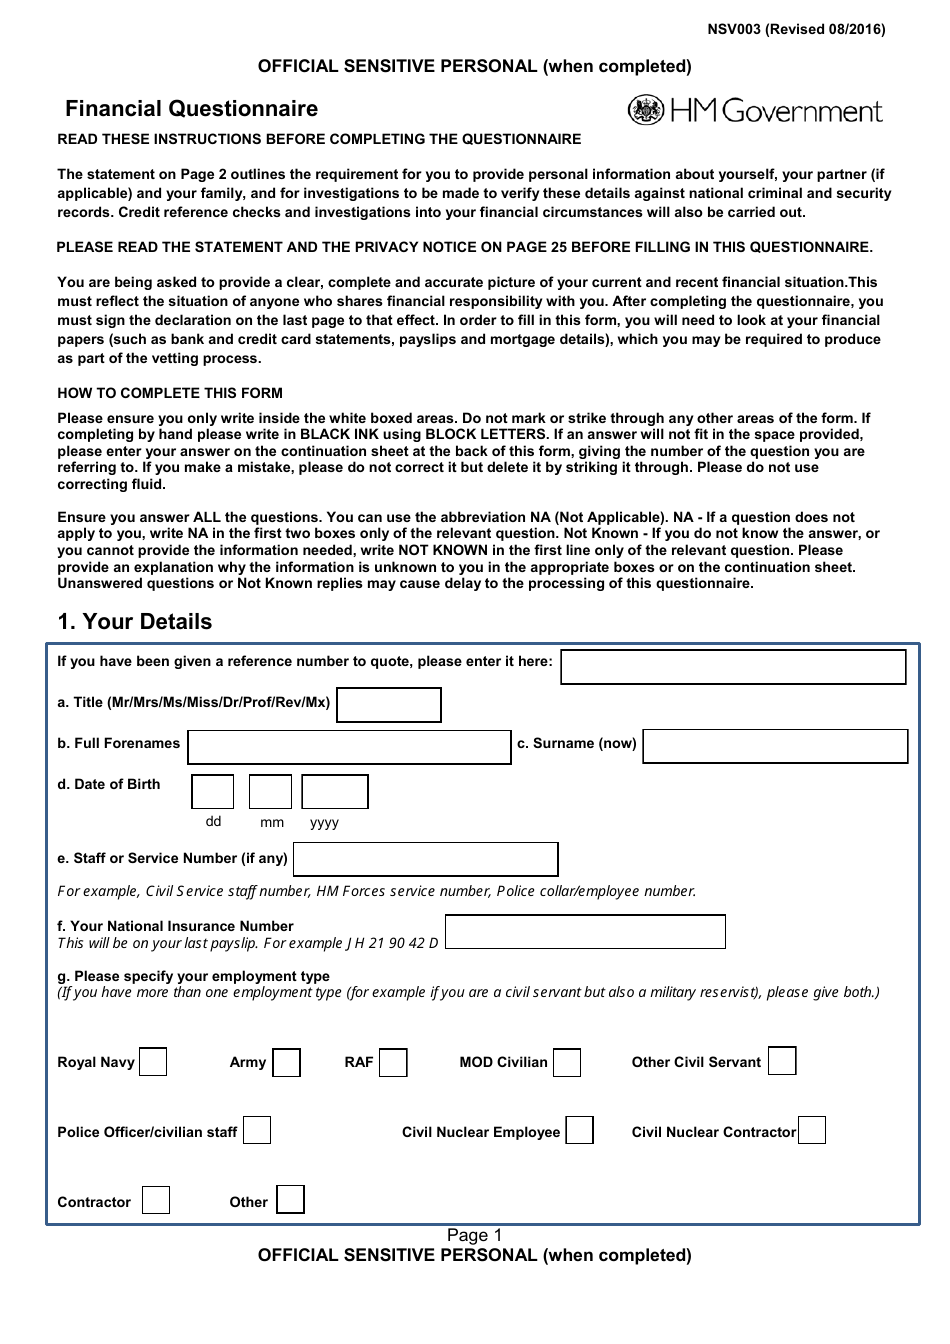 Form NSV003 Financial Questionnaire - United Kingdom, Page 1